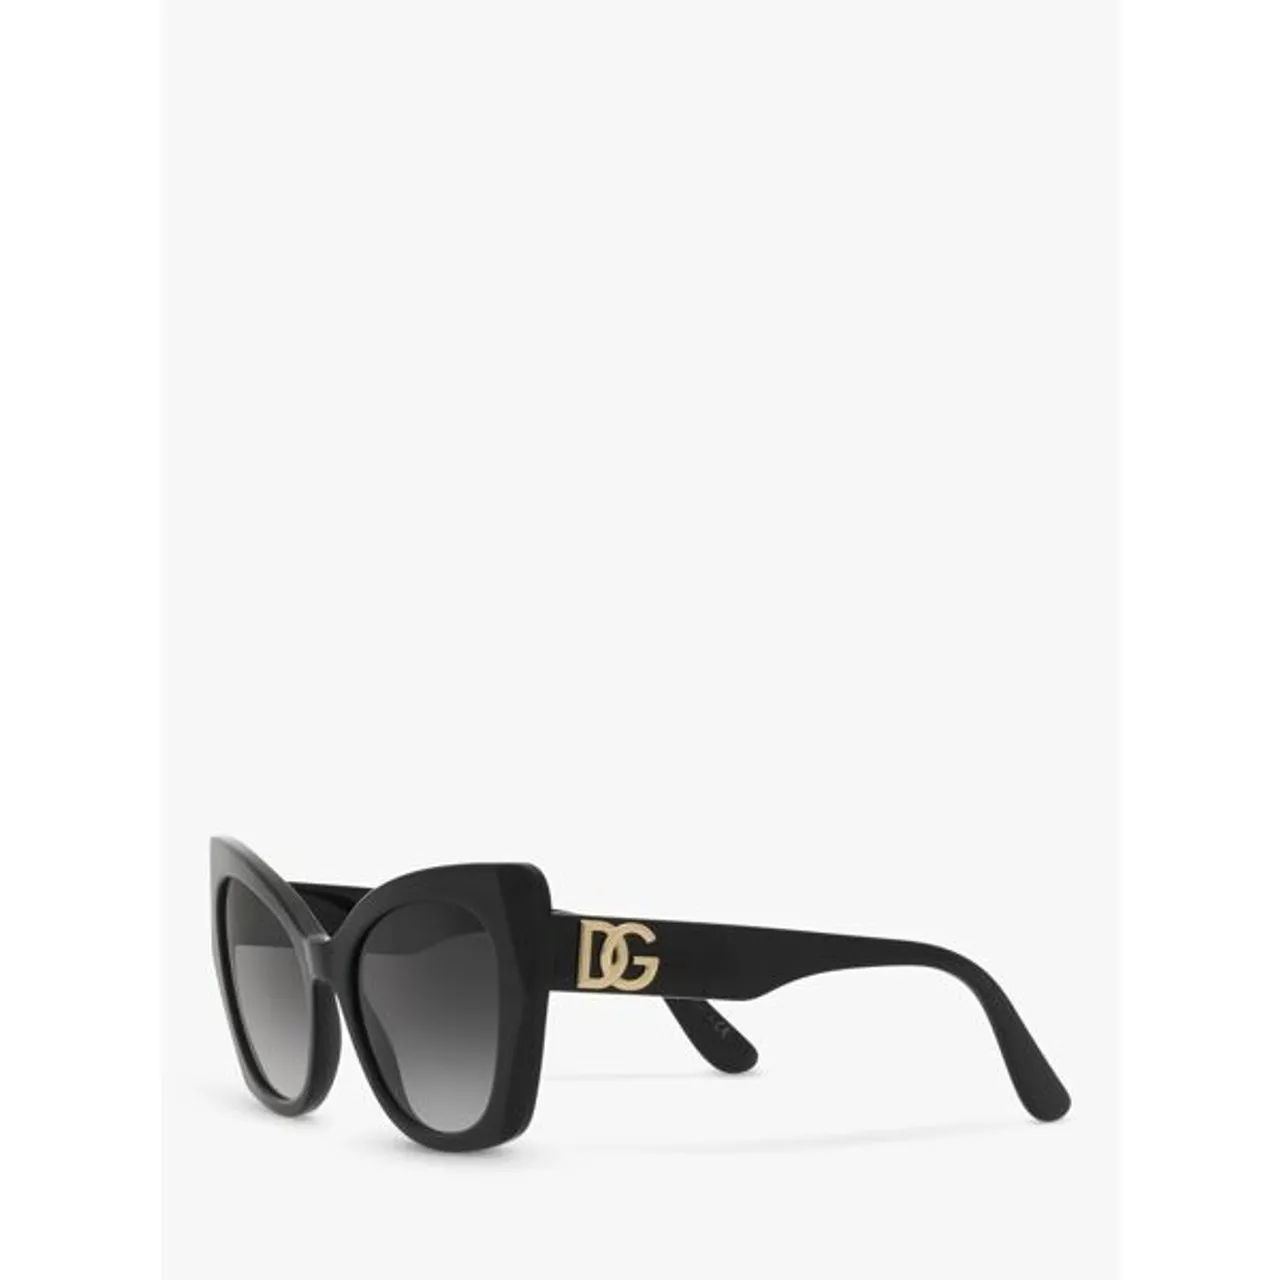 Dolce & Gabbana DG4405 Women's Butterfly Sunglasses - Black/Grey Gradient - Female